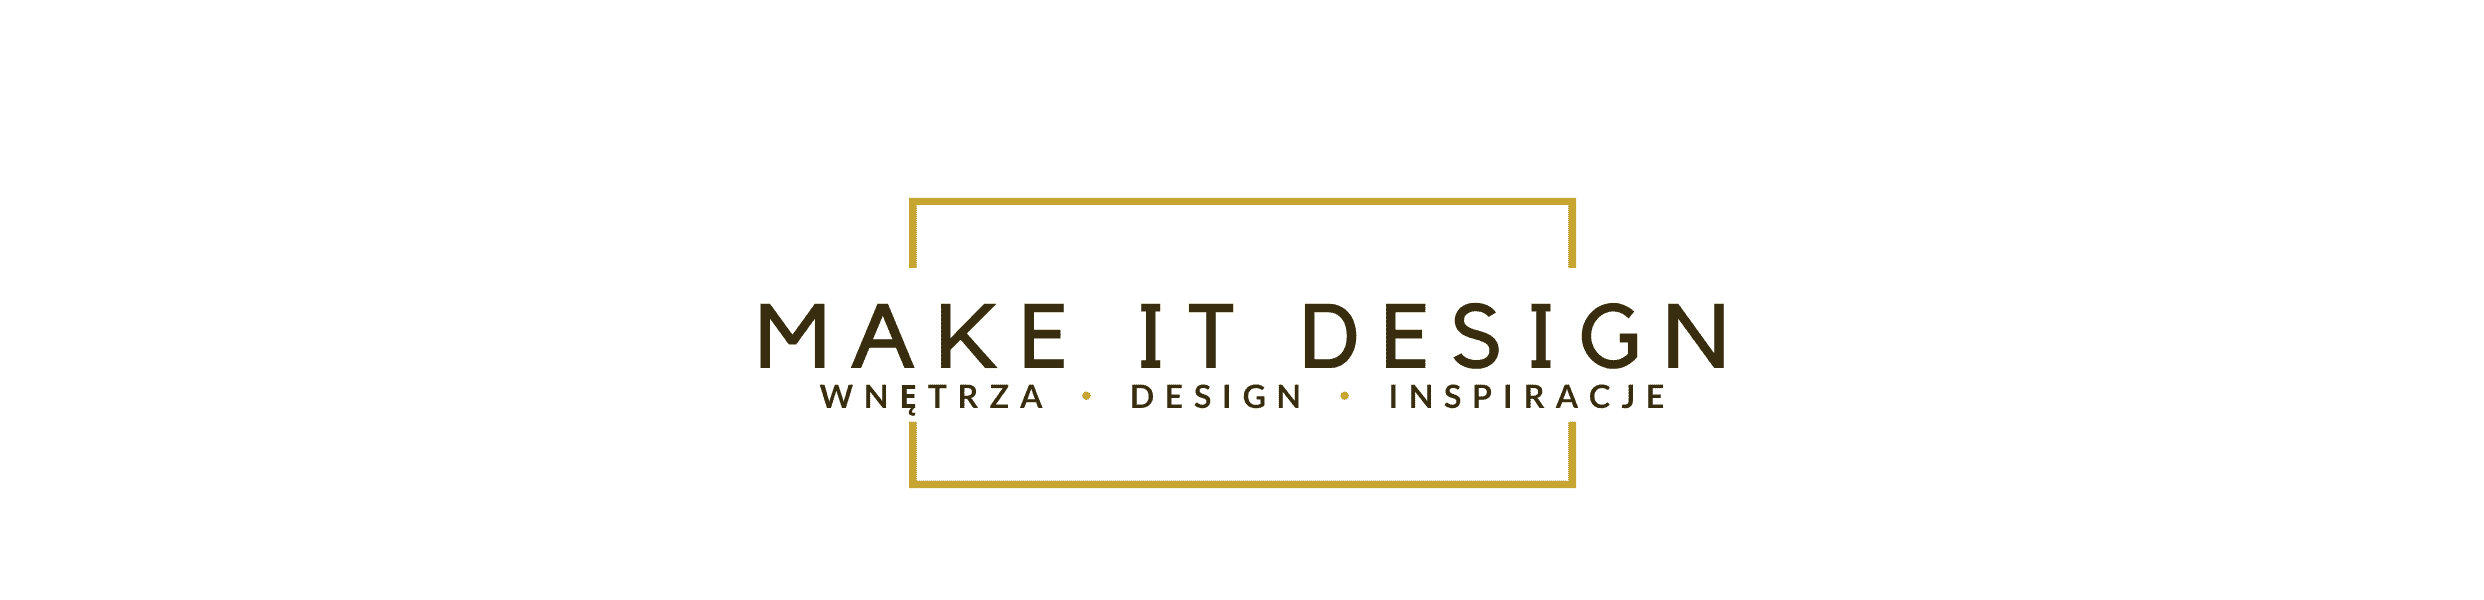 Make It Design